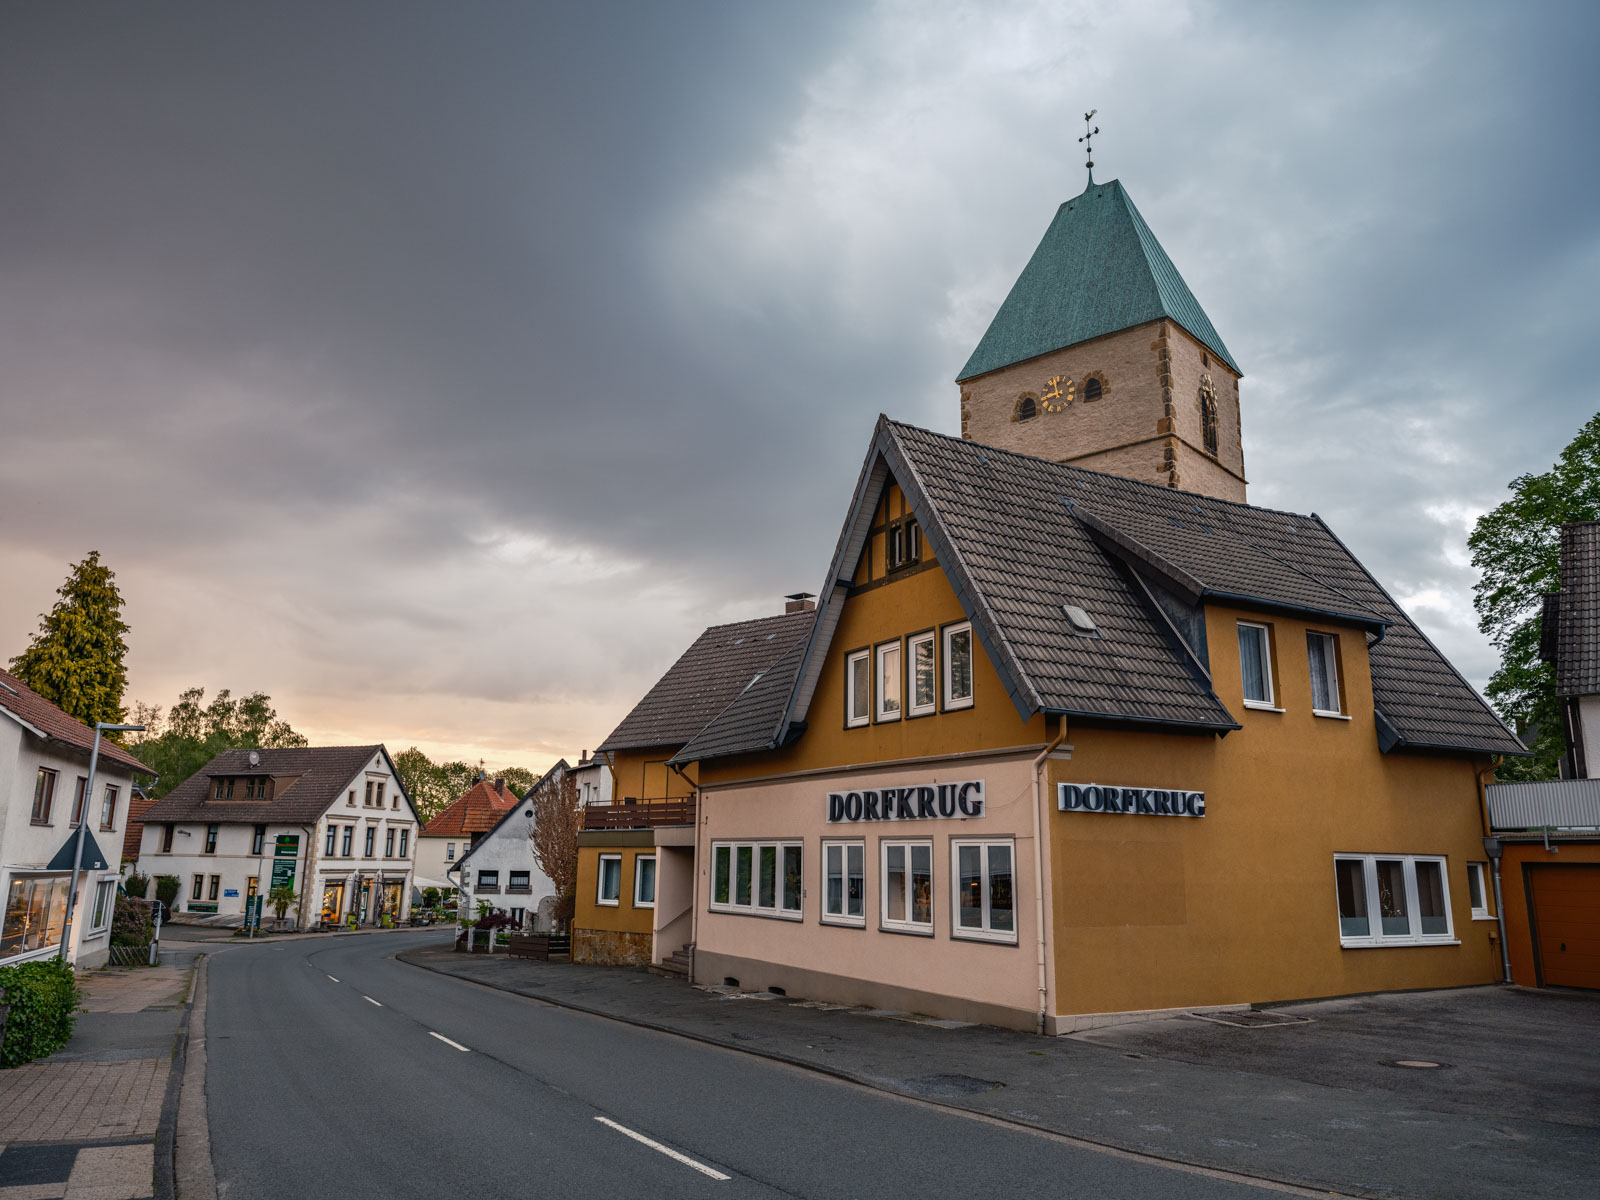 Village road, tavern and church in May 2021 (Bielefeld-Kirchdornberg, Germany).